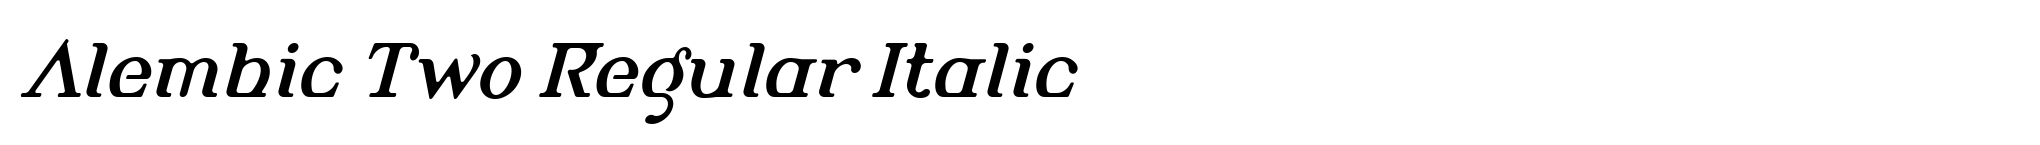 Alembic Two Regular Italic image